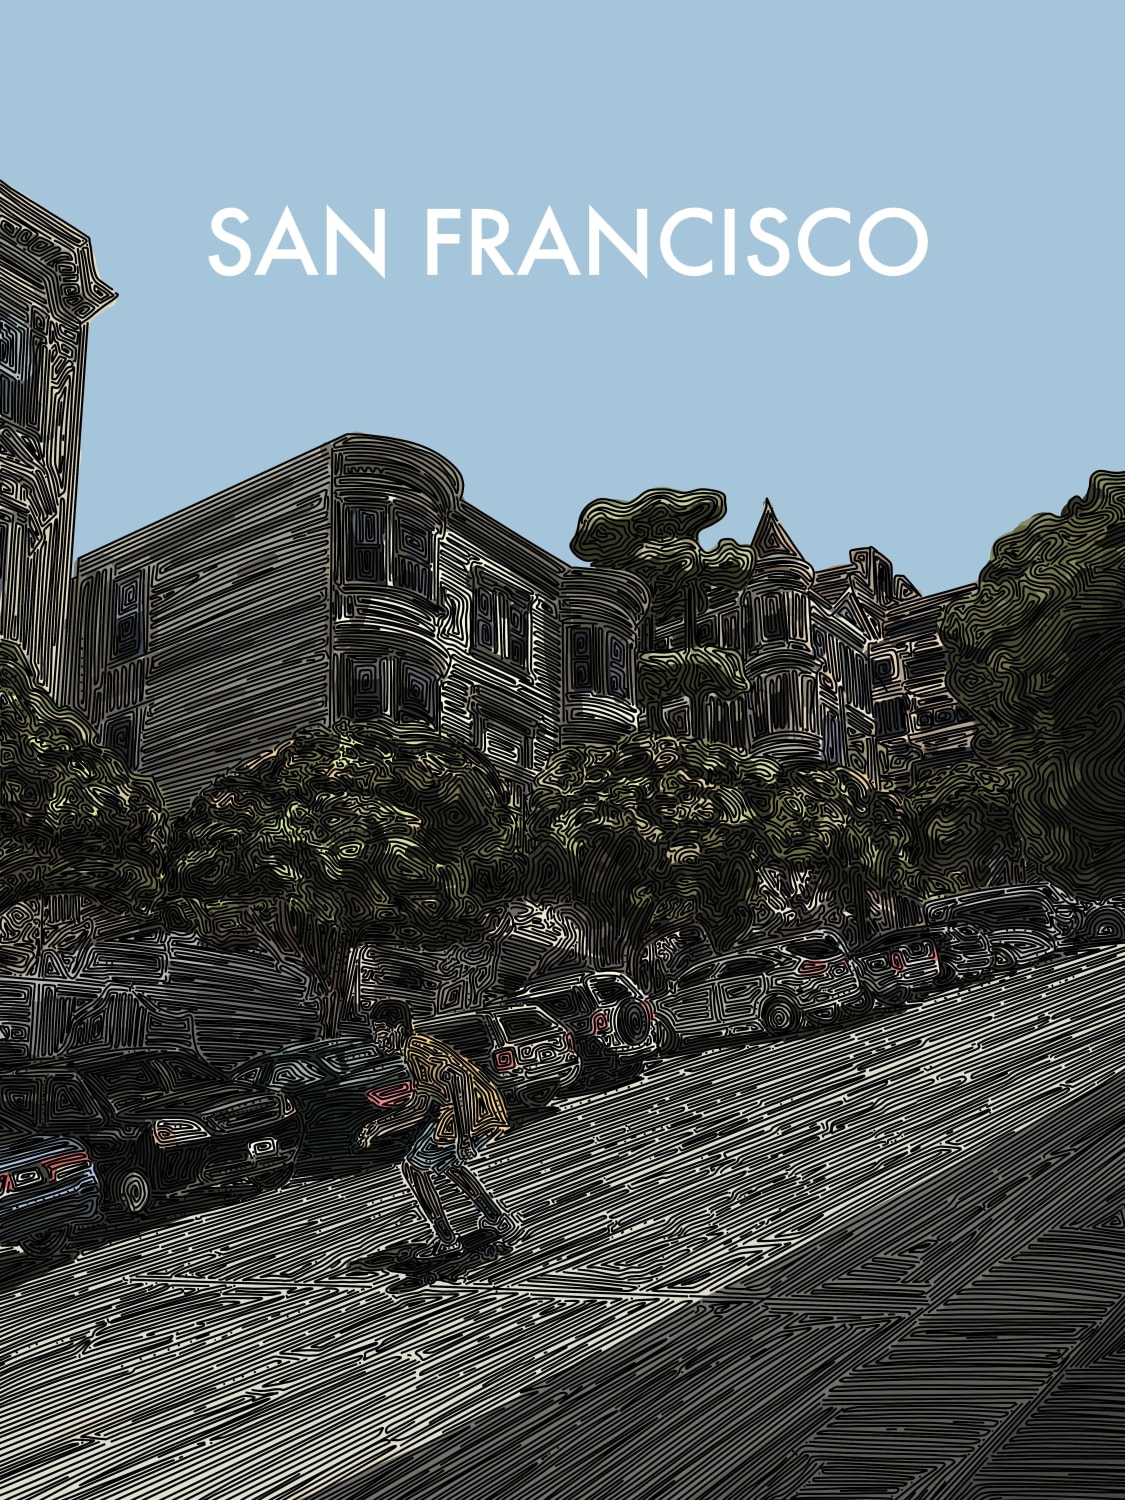 San Francisco by Me ( @notimetoburn on IG)